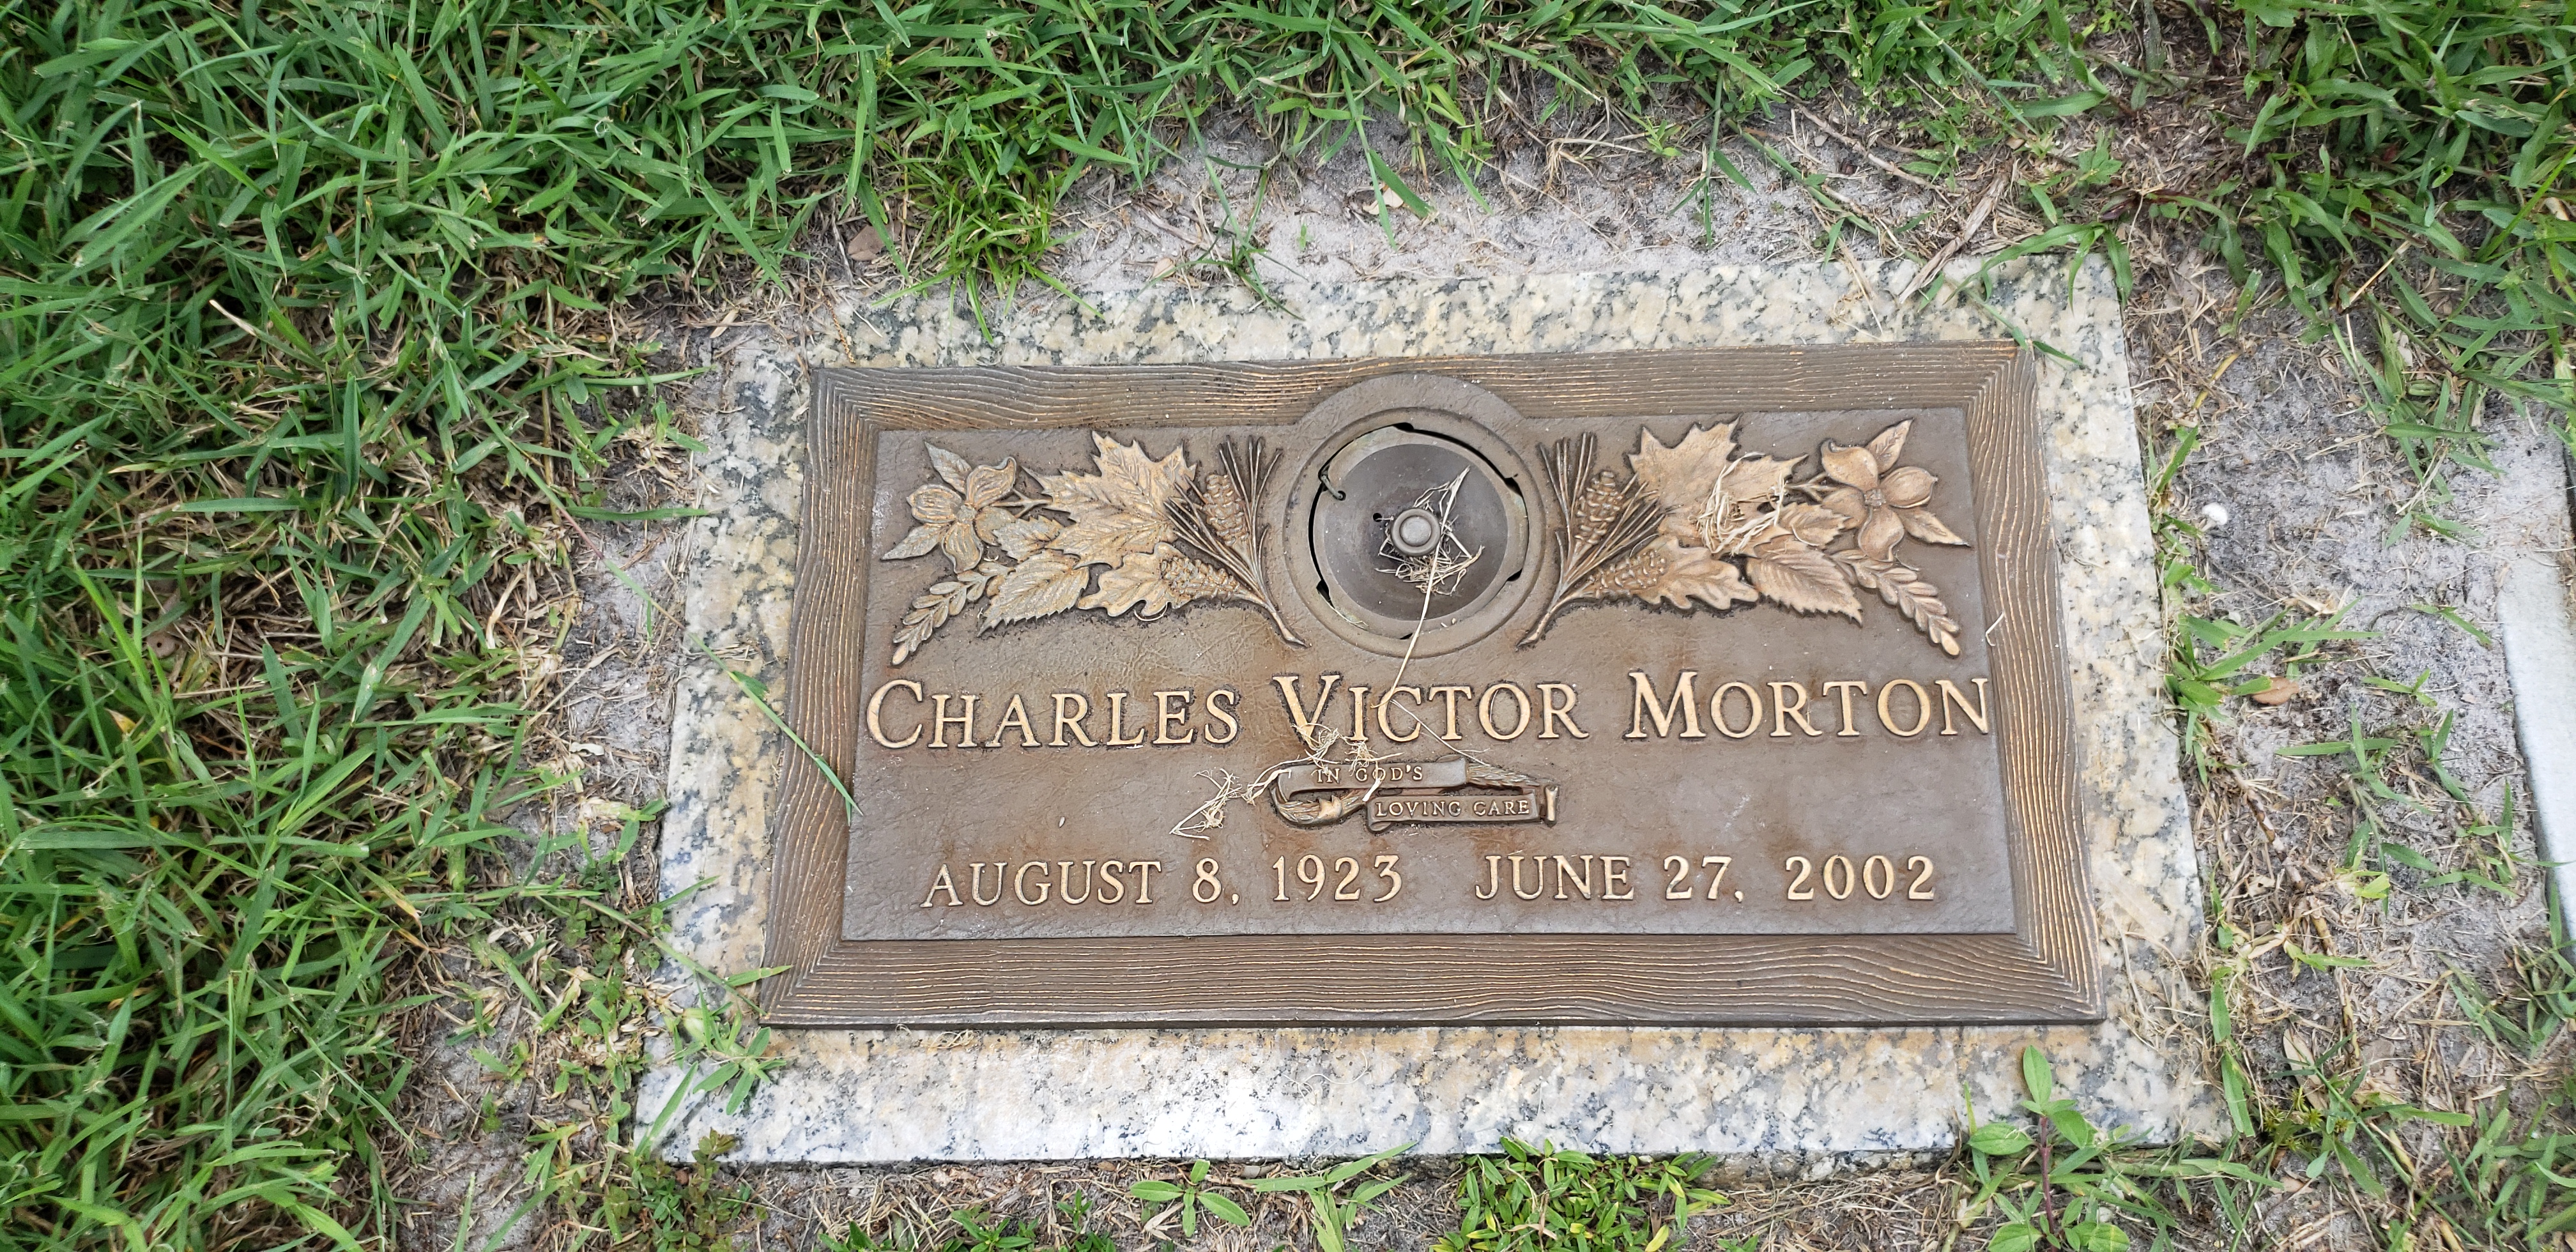 Charles Victor Morton